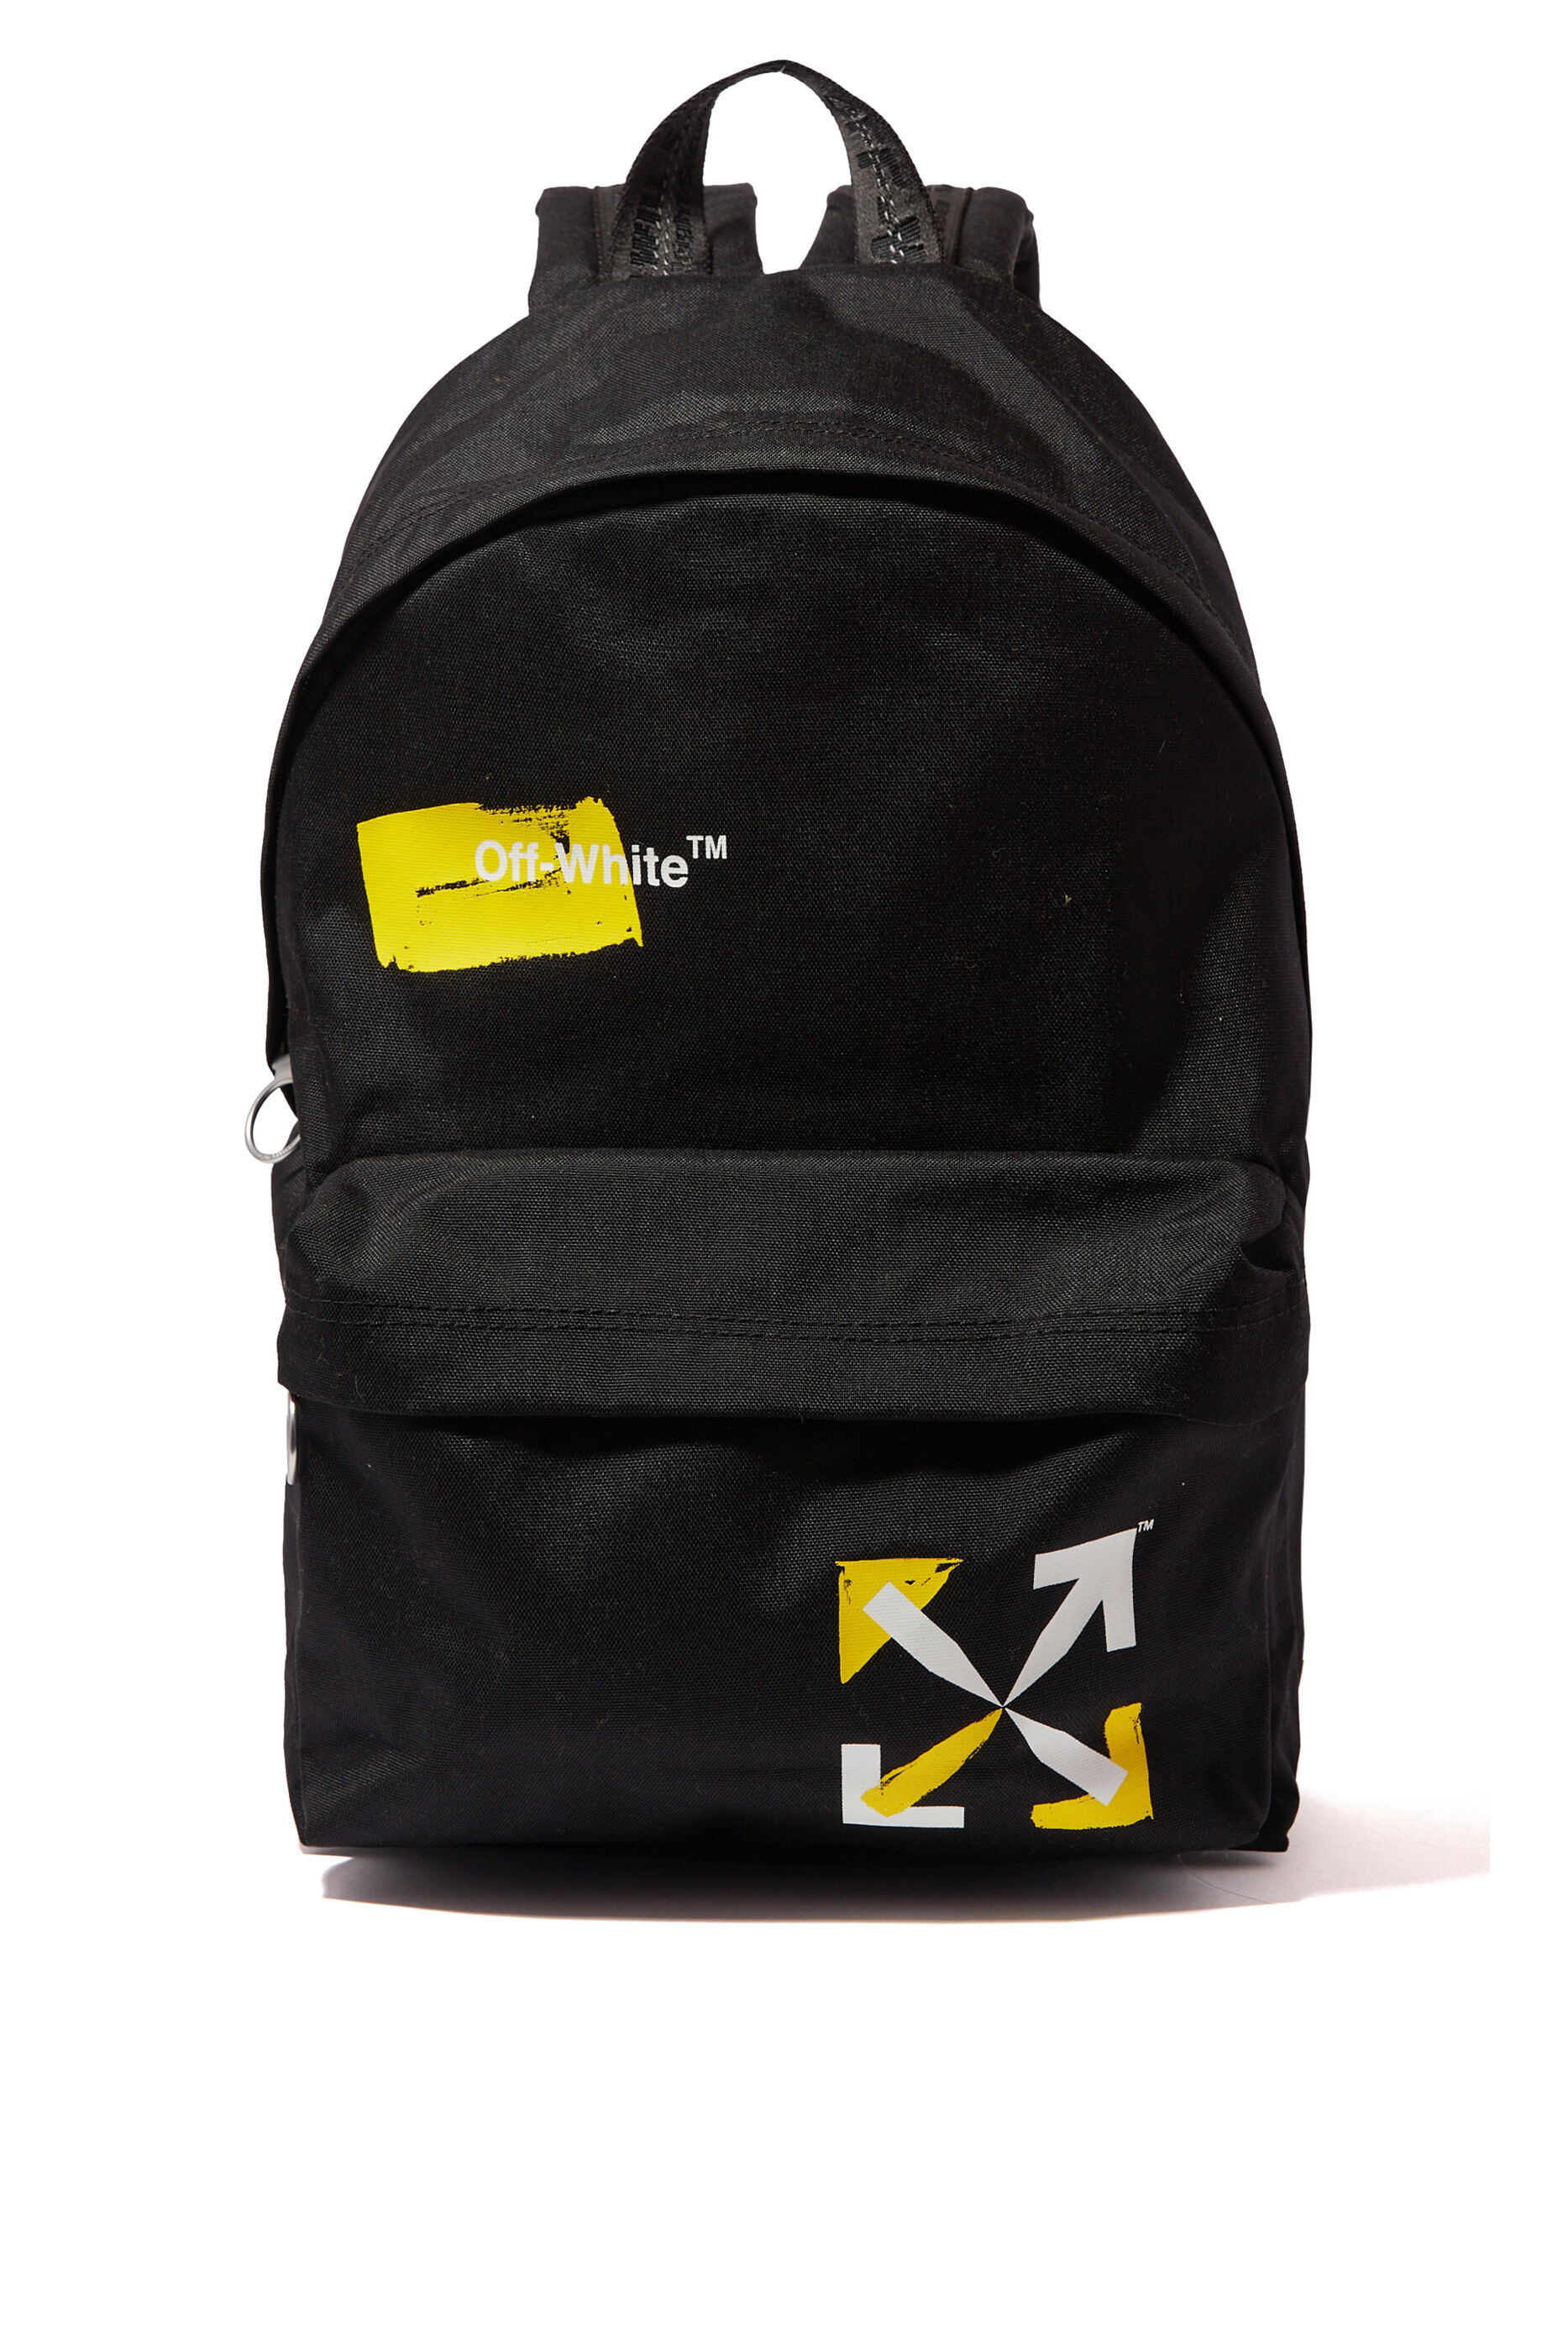 Bloomingdales Accessories Bags Laptop Bags Logo Belt Bag 